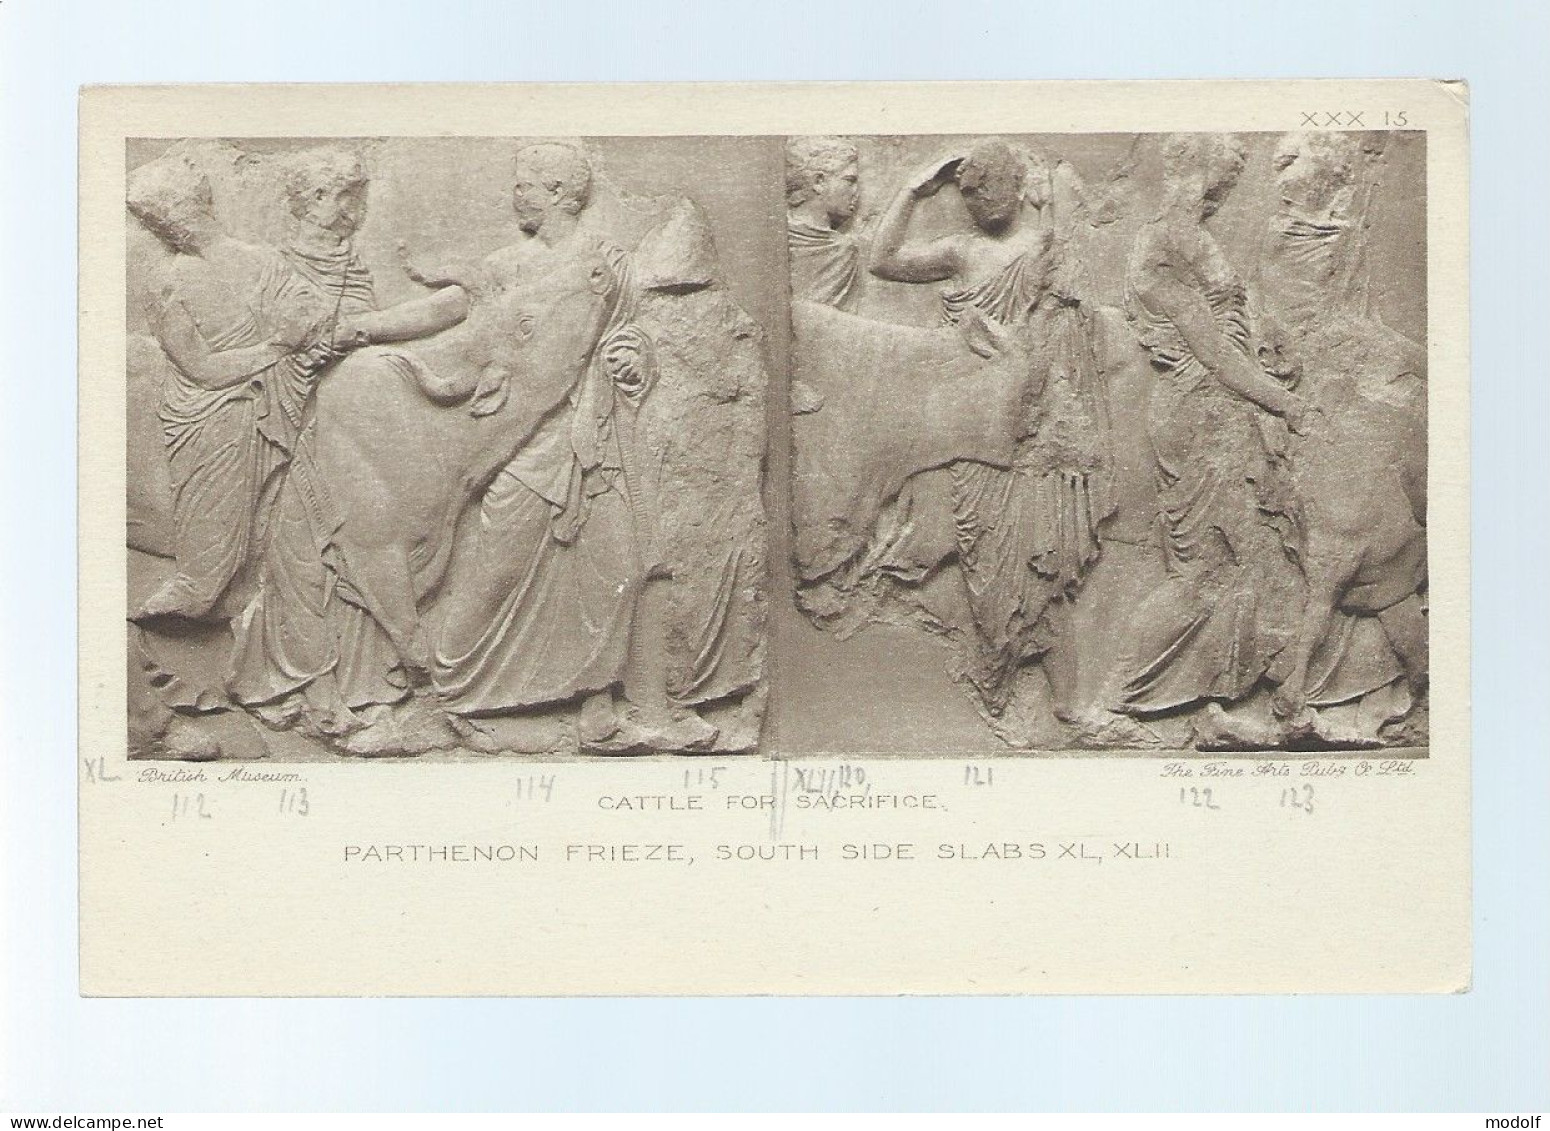 CPA - Arts - Sculptures - British Museum - Parthenon Frieze, South Side Slabs XL,XLII - Non Circulée - Skulpturen